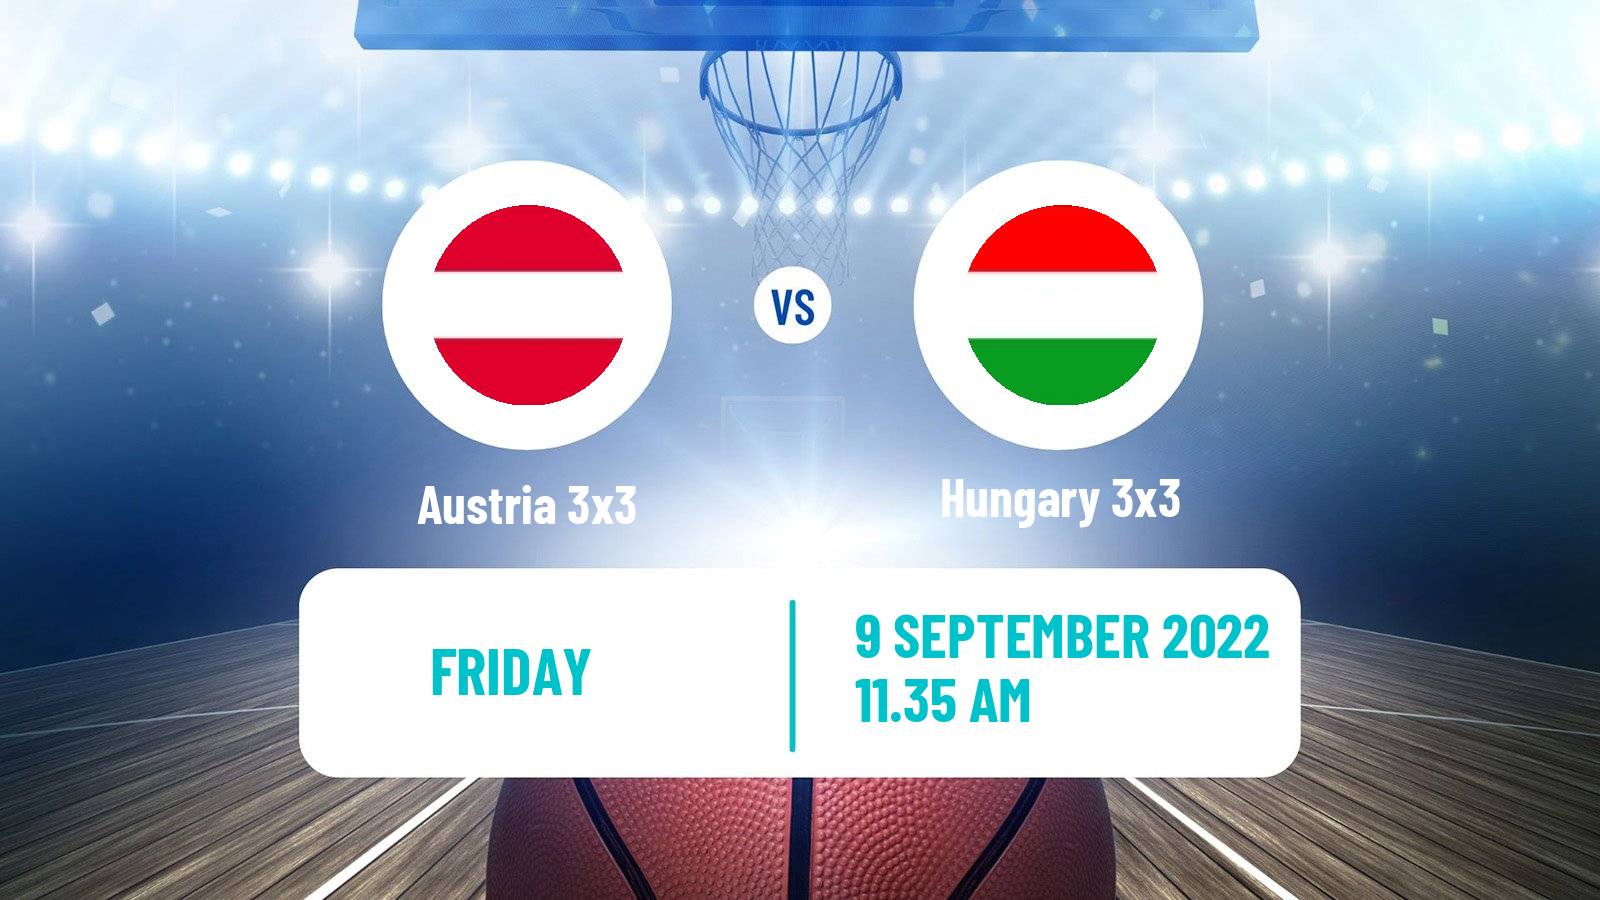 Basketball Europe Cup Basketball 3x3 Austria 3x3 - Hungary 3x3